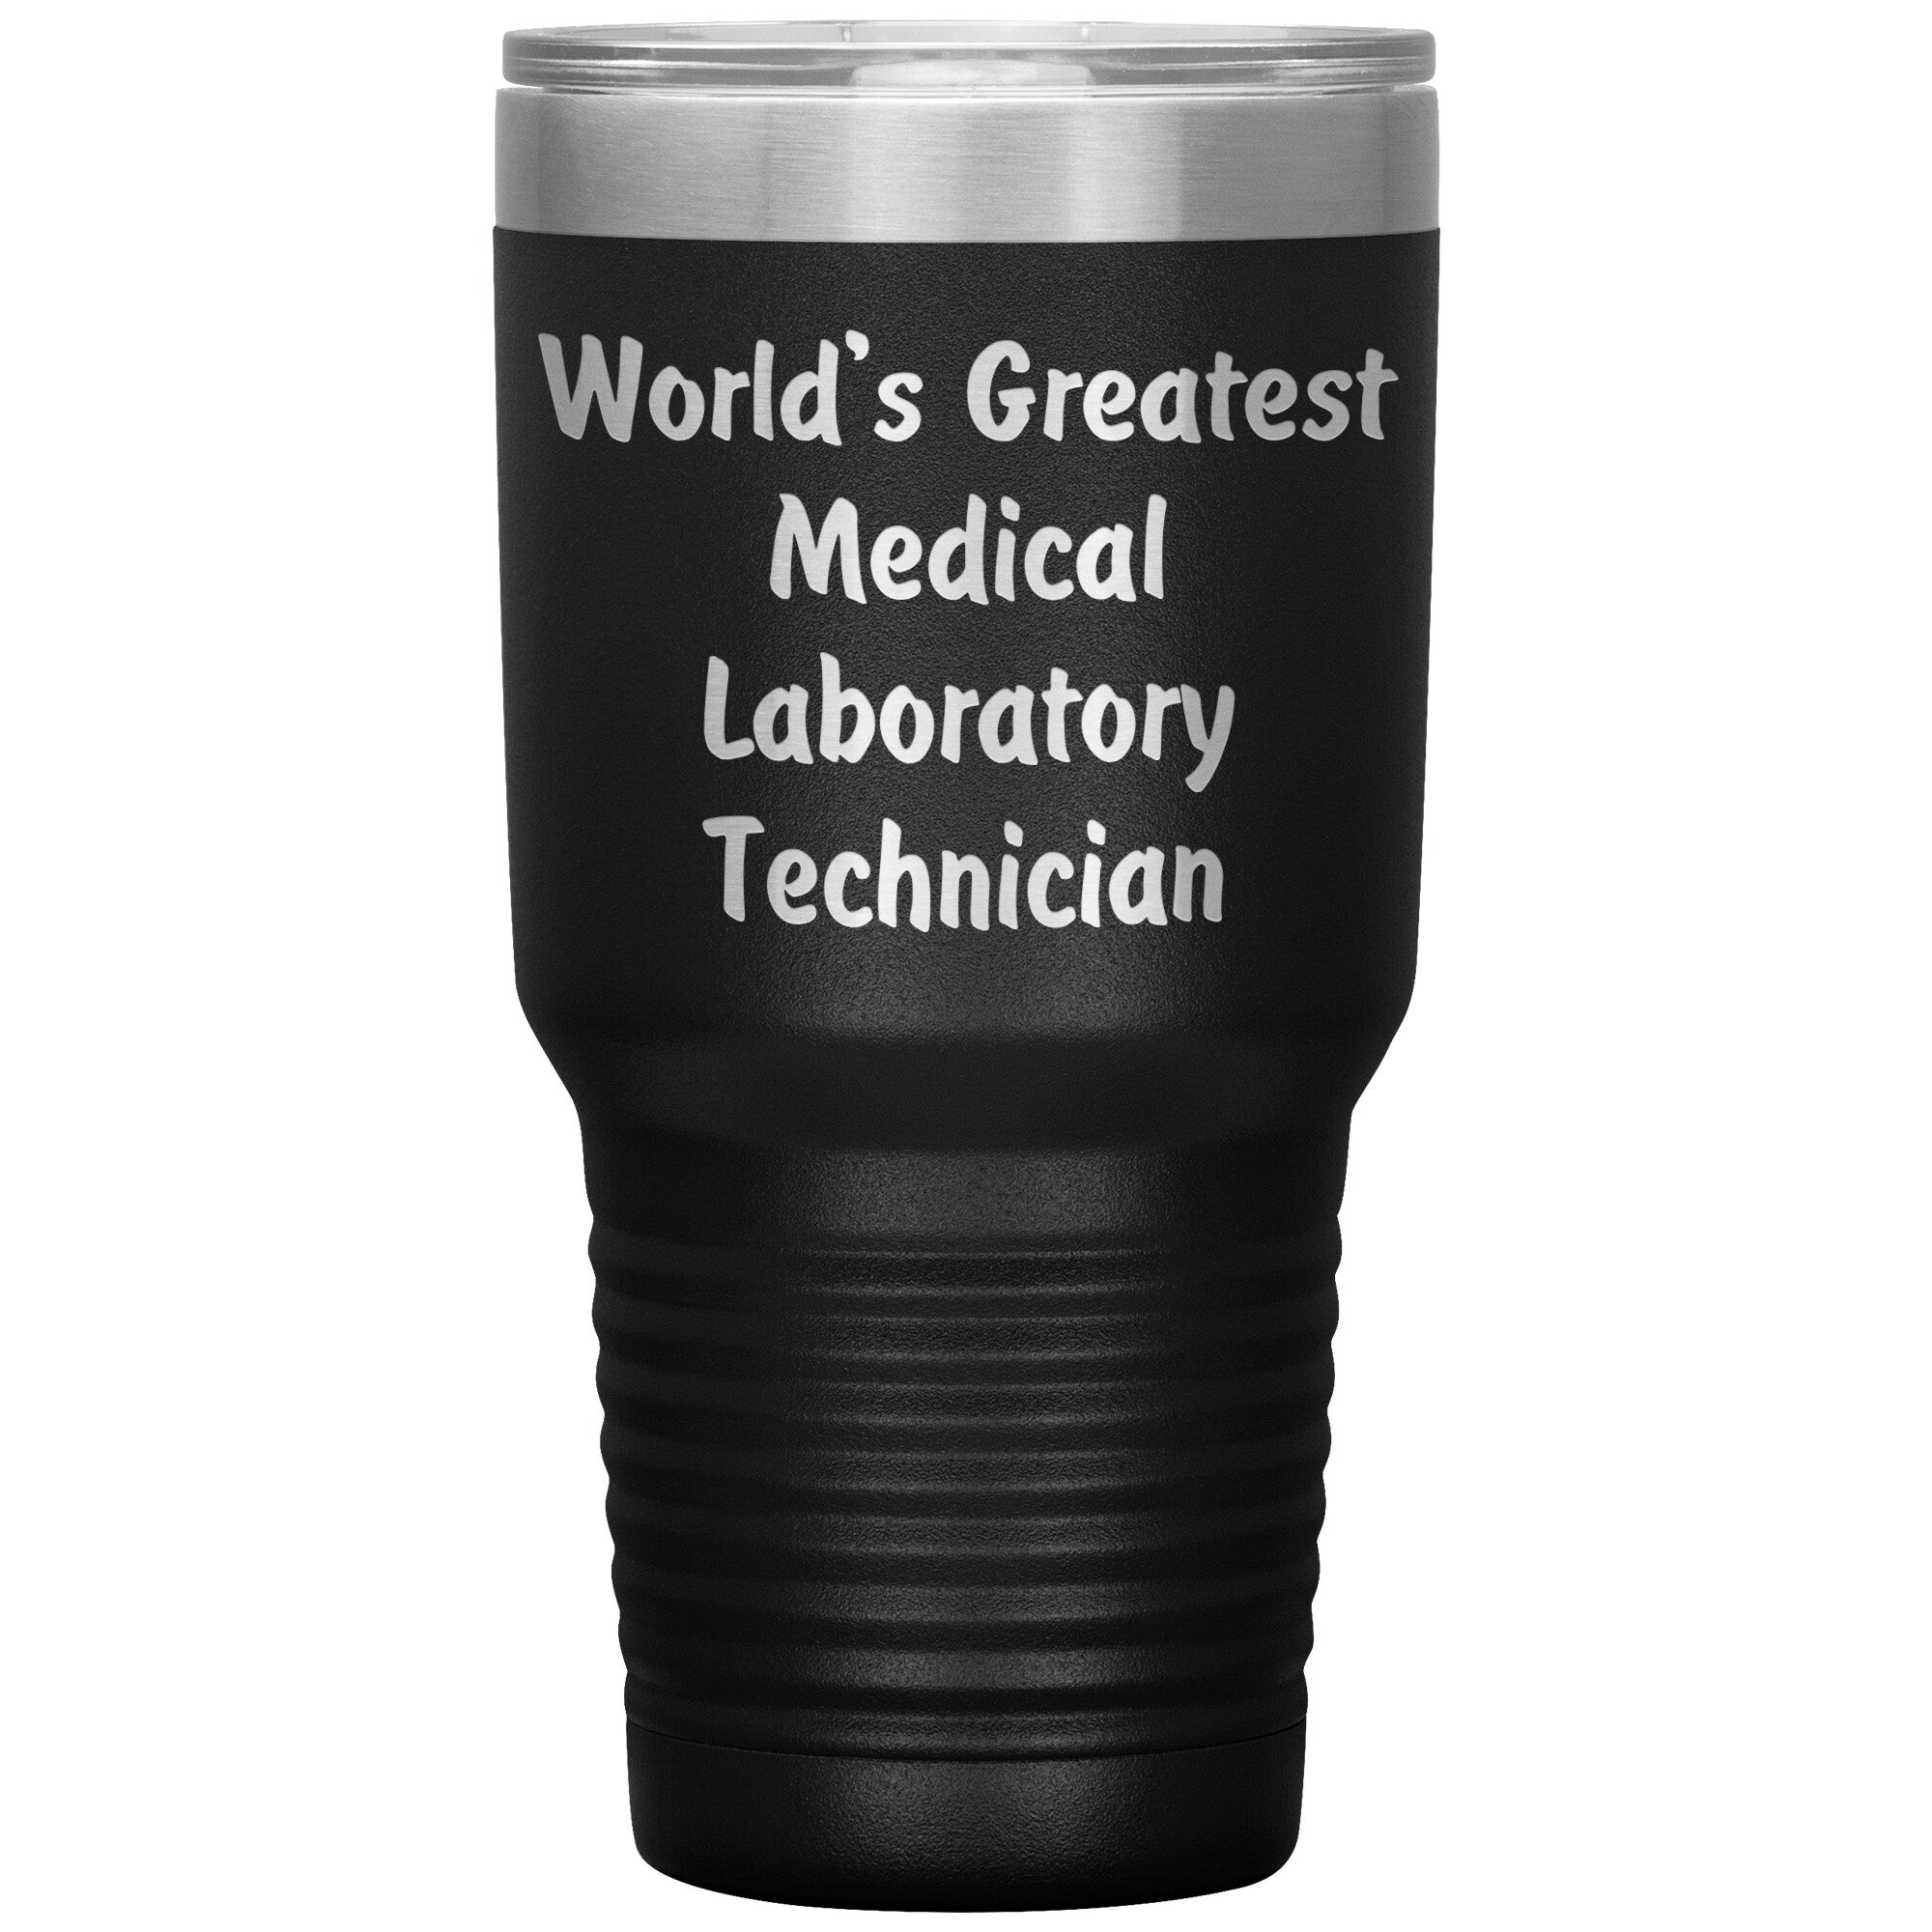 World's Greatest Medical Laboratory Technician - 30oz Insulated Tumbler